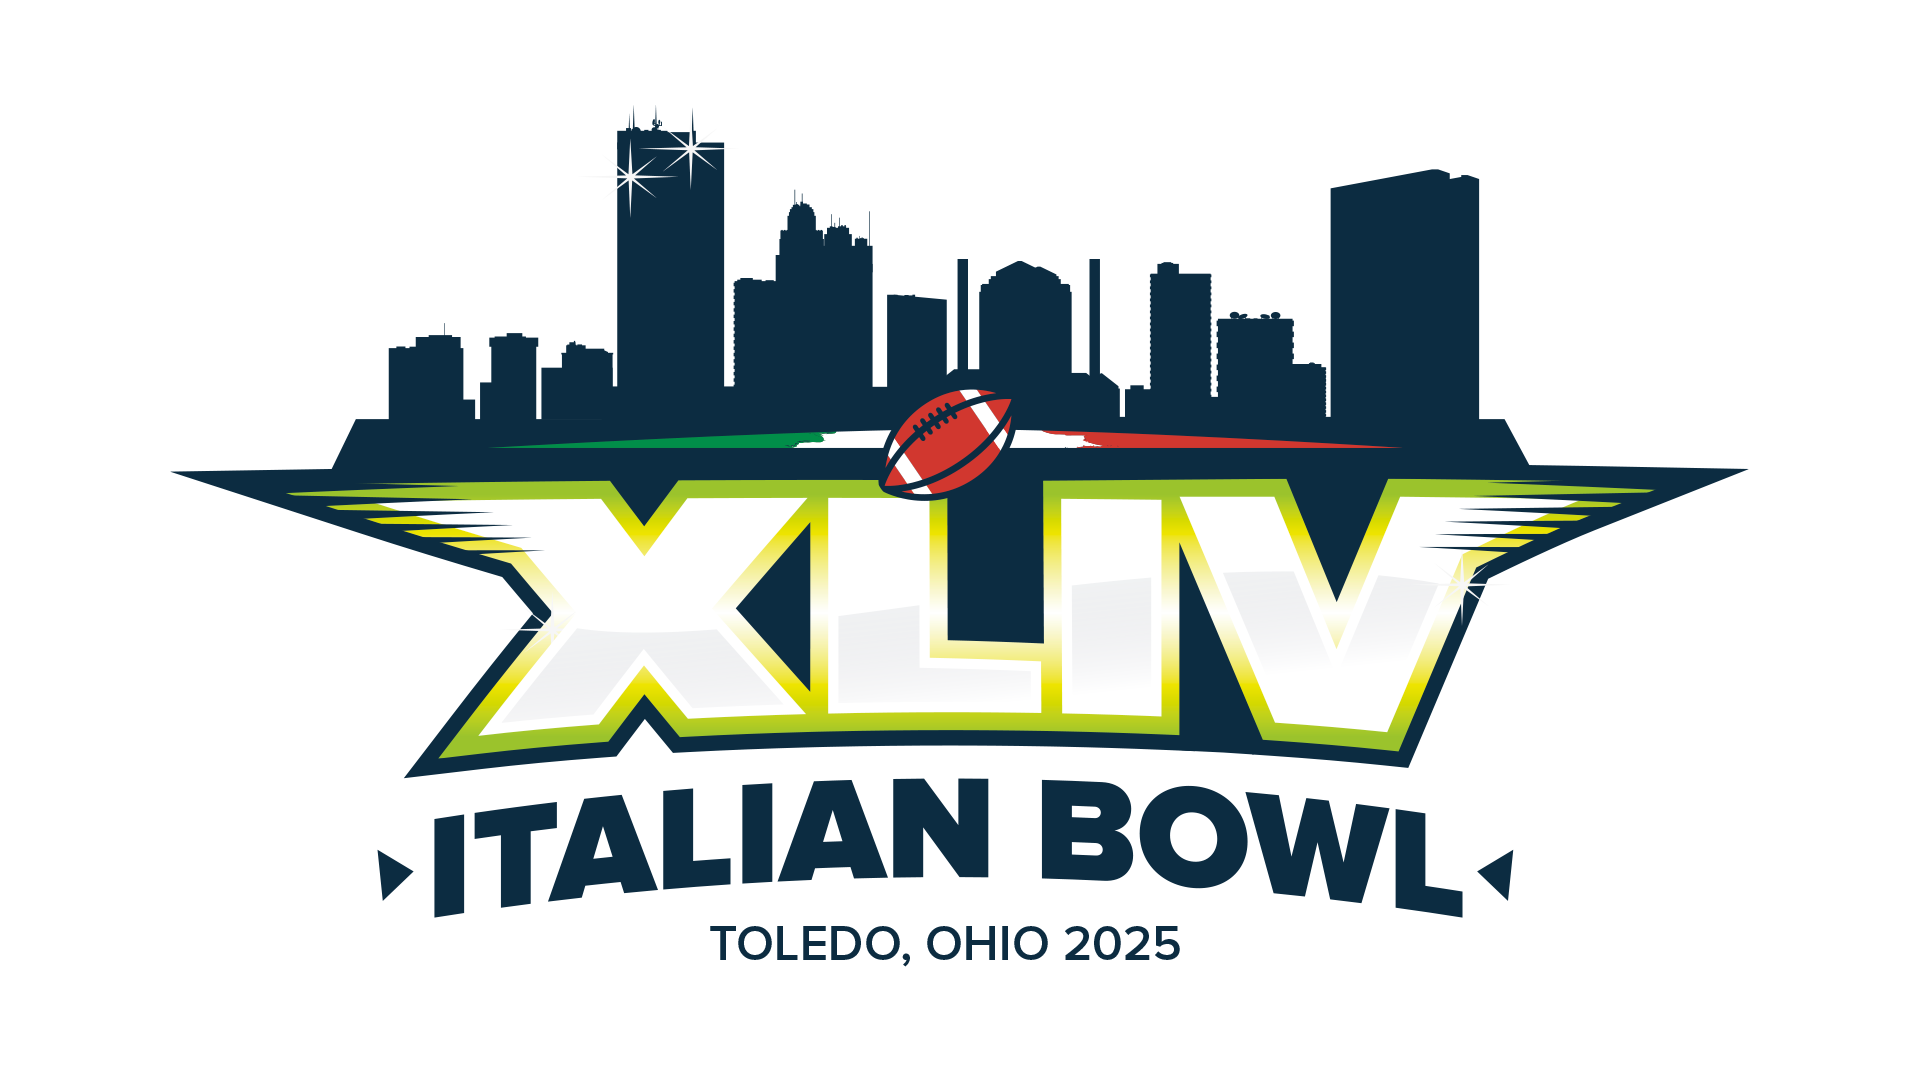 The Italian Bowl USA 2025 logo